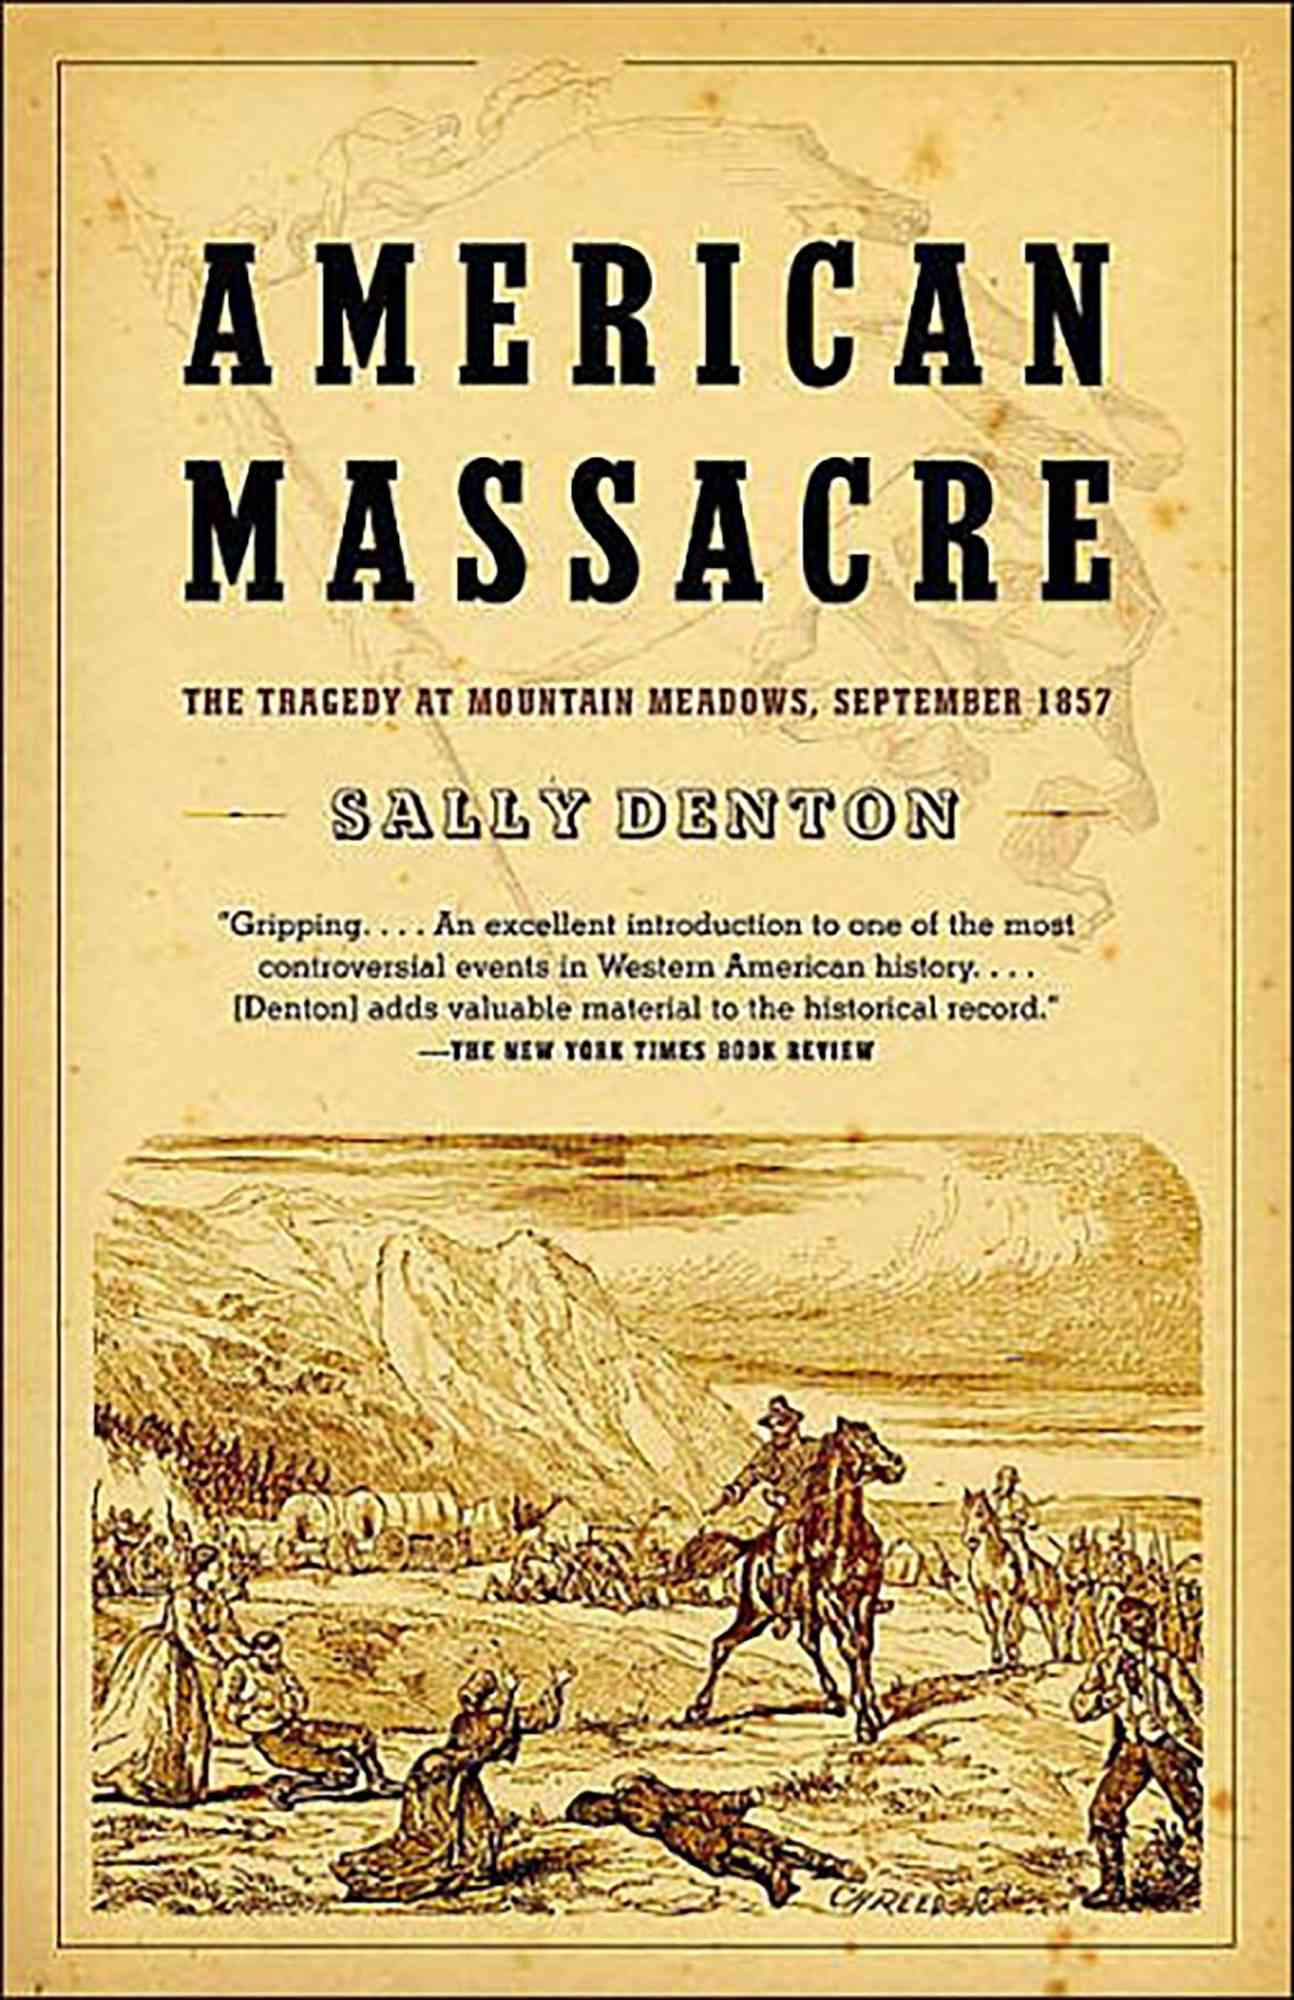 American Massacre by Sally Denton